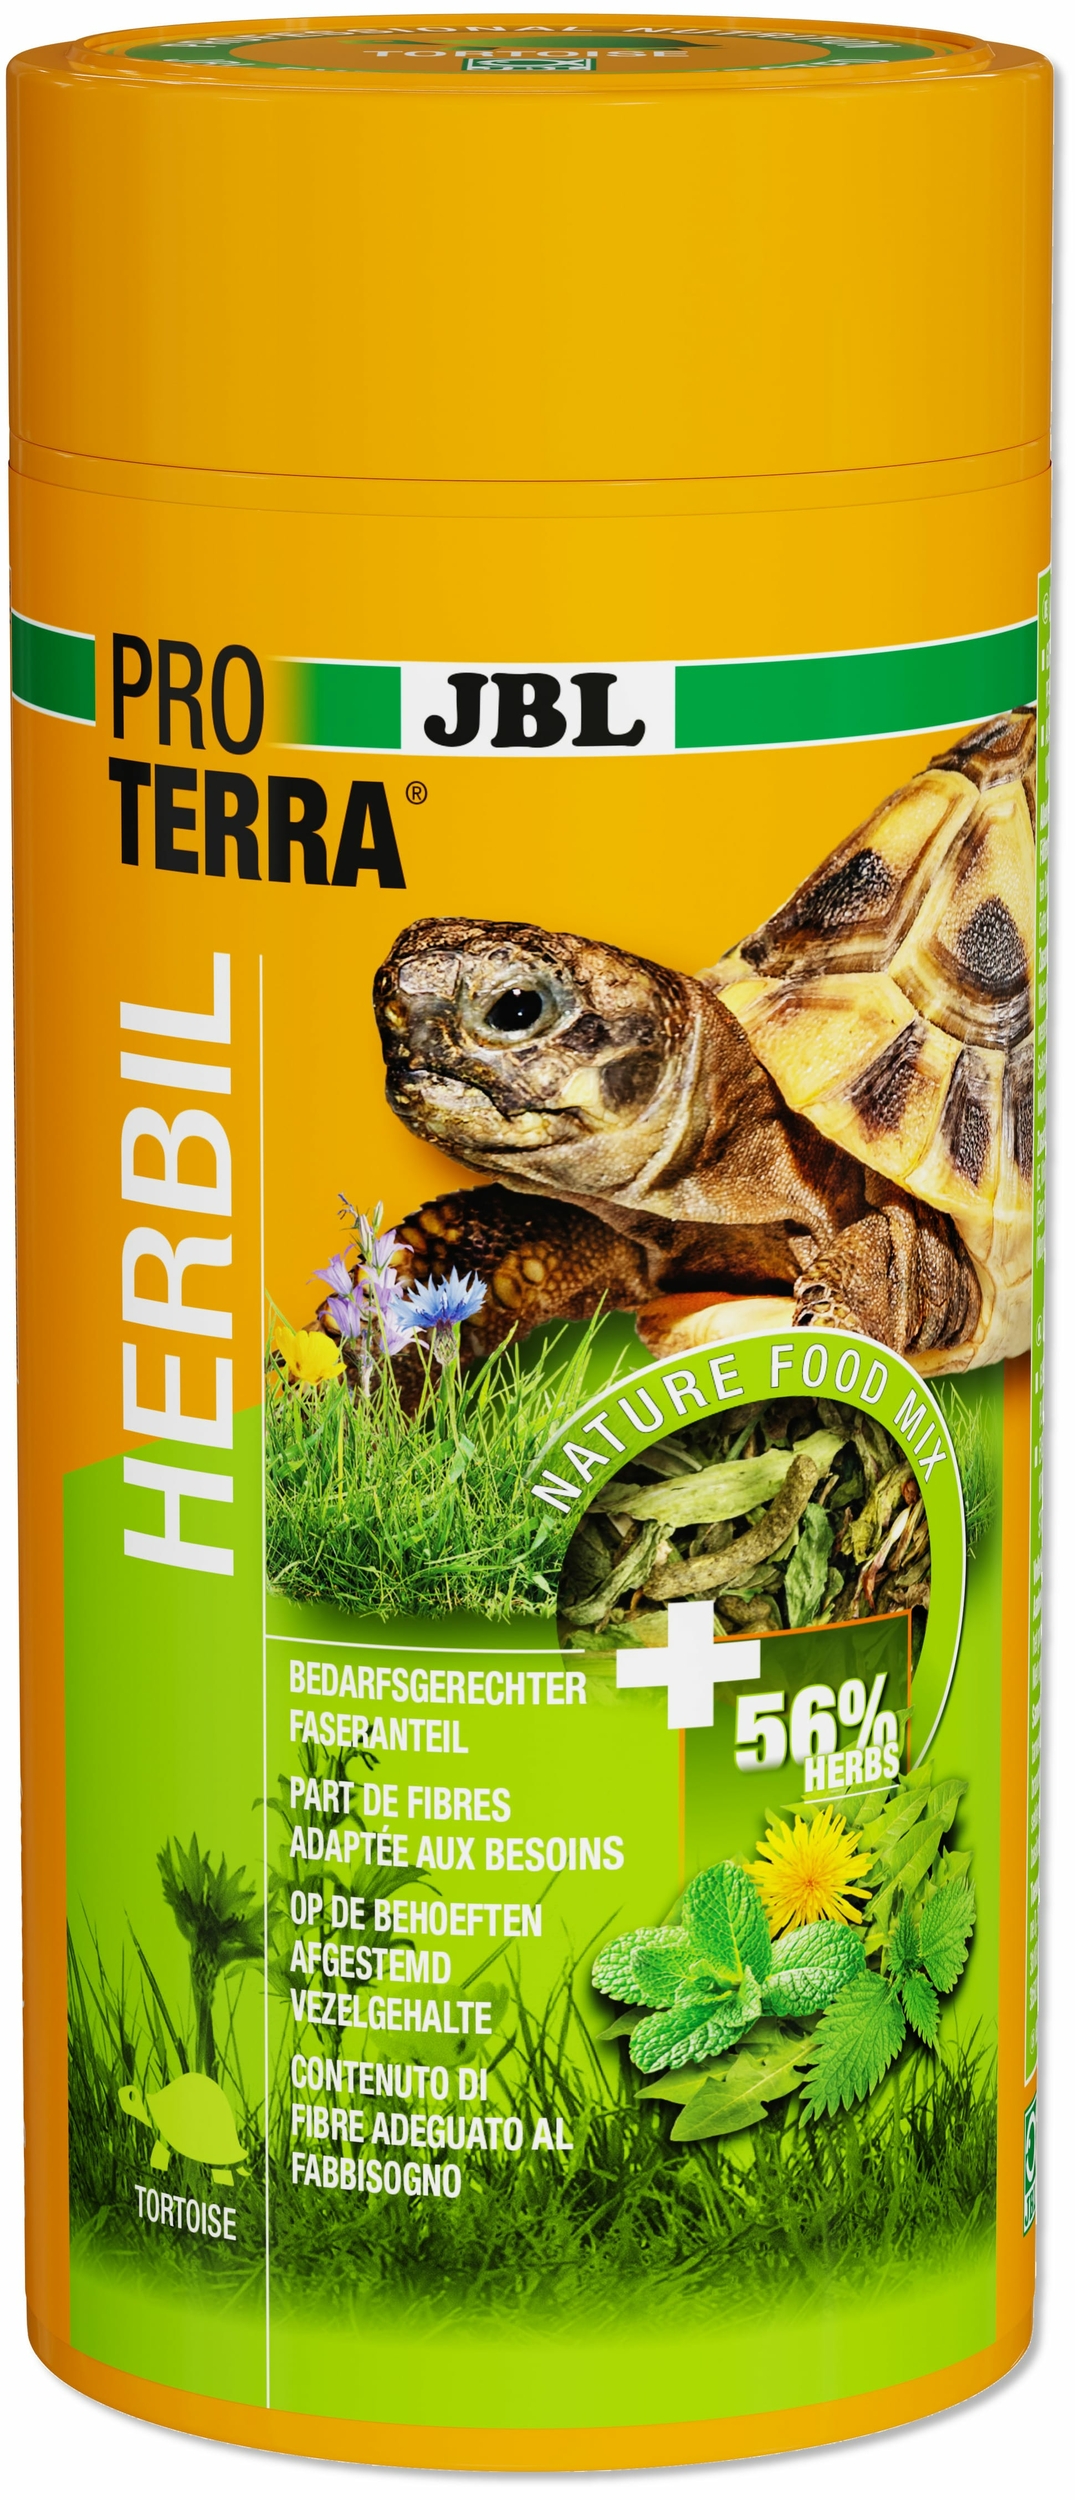 jbl-proterra-herbil-1000-ml-nourriture-de-base-aux-herbes-pour-tortues-terrestres-min